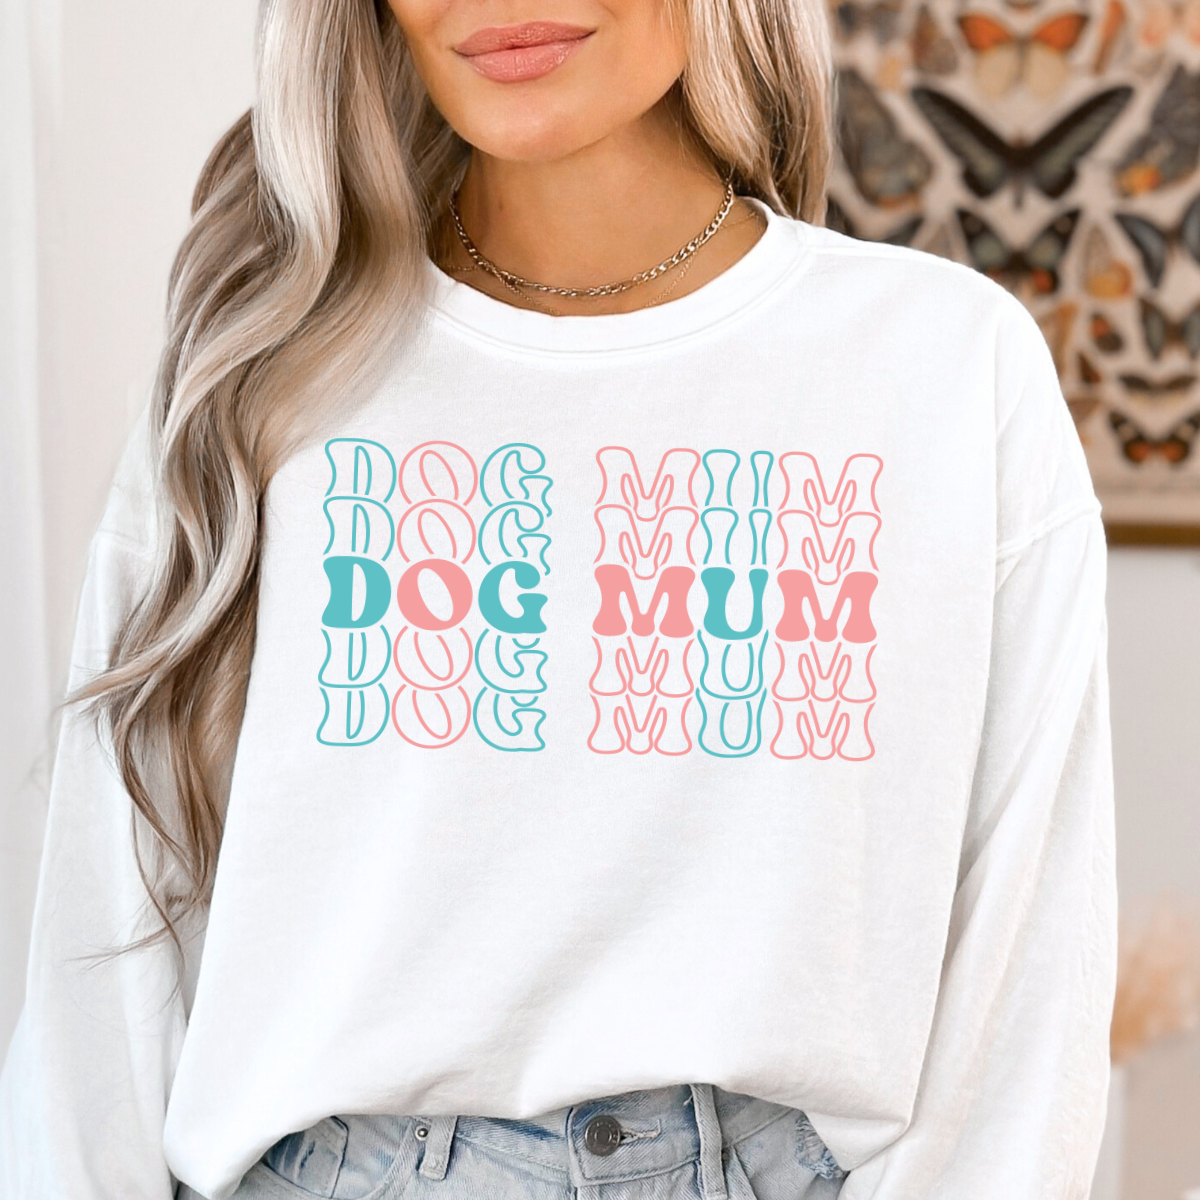 Dog Mum DTF Transfer